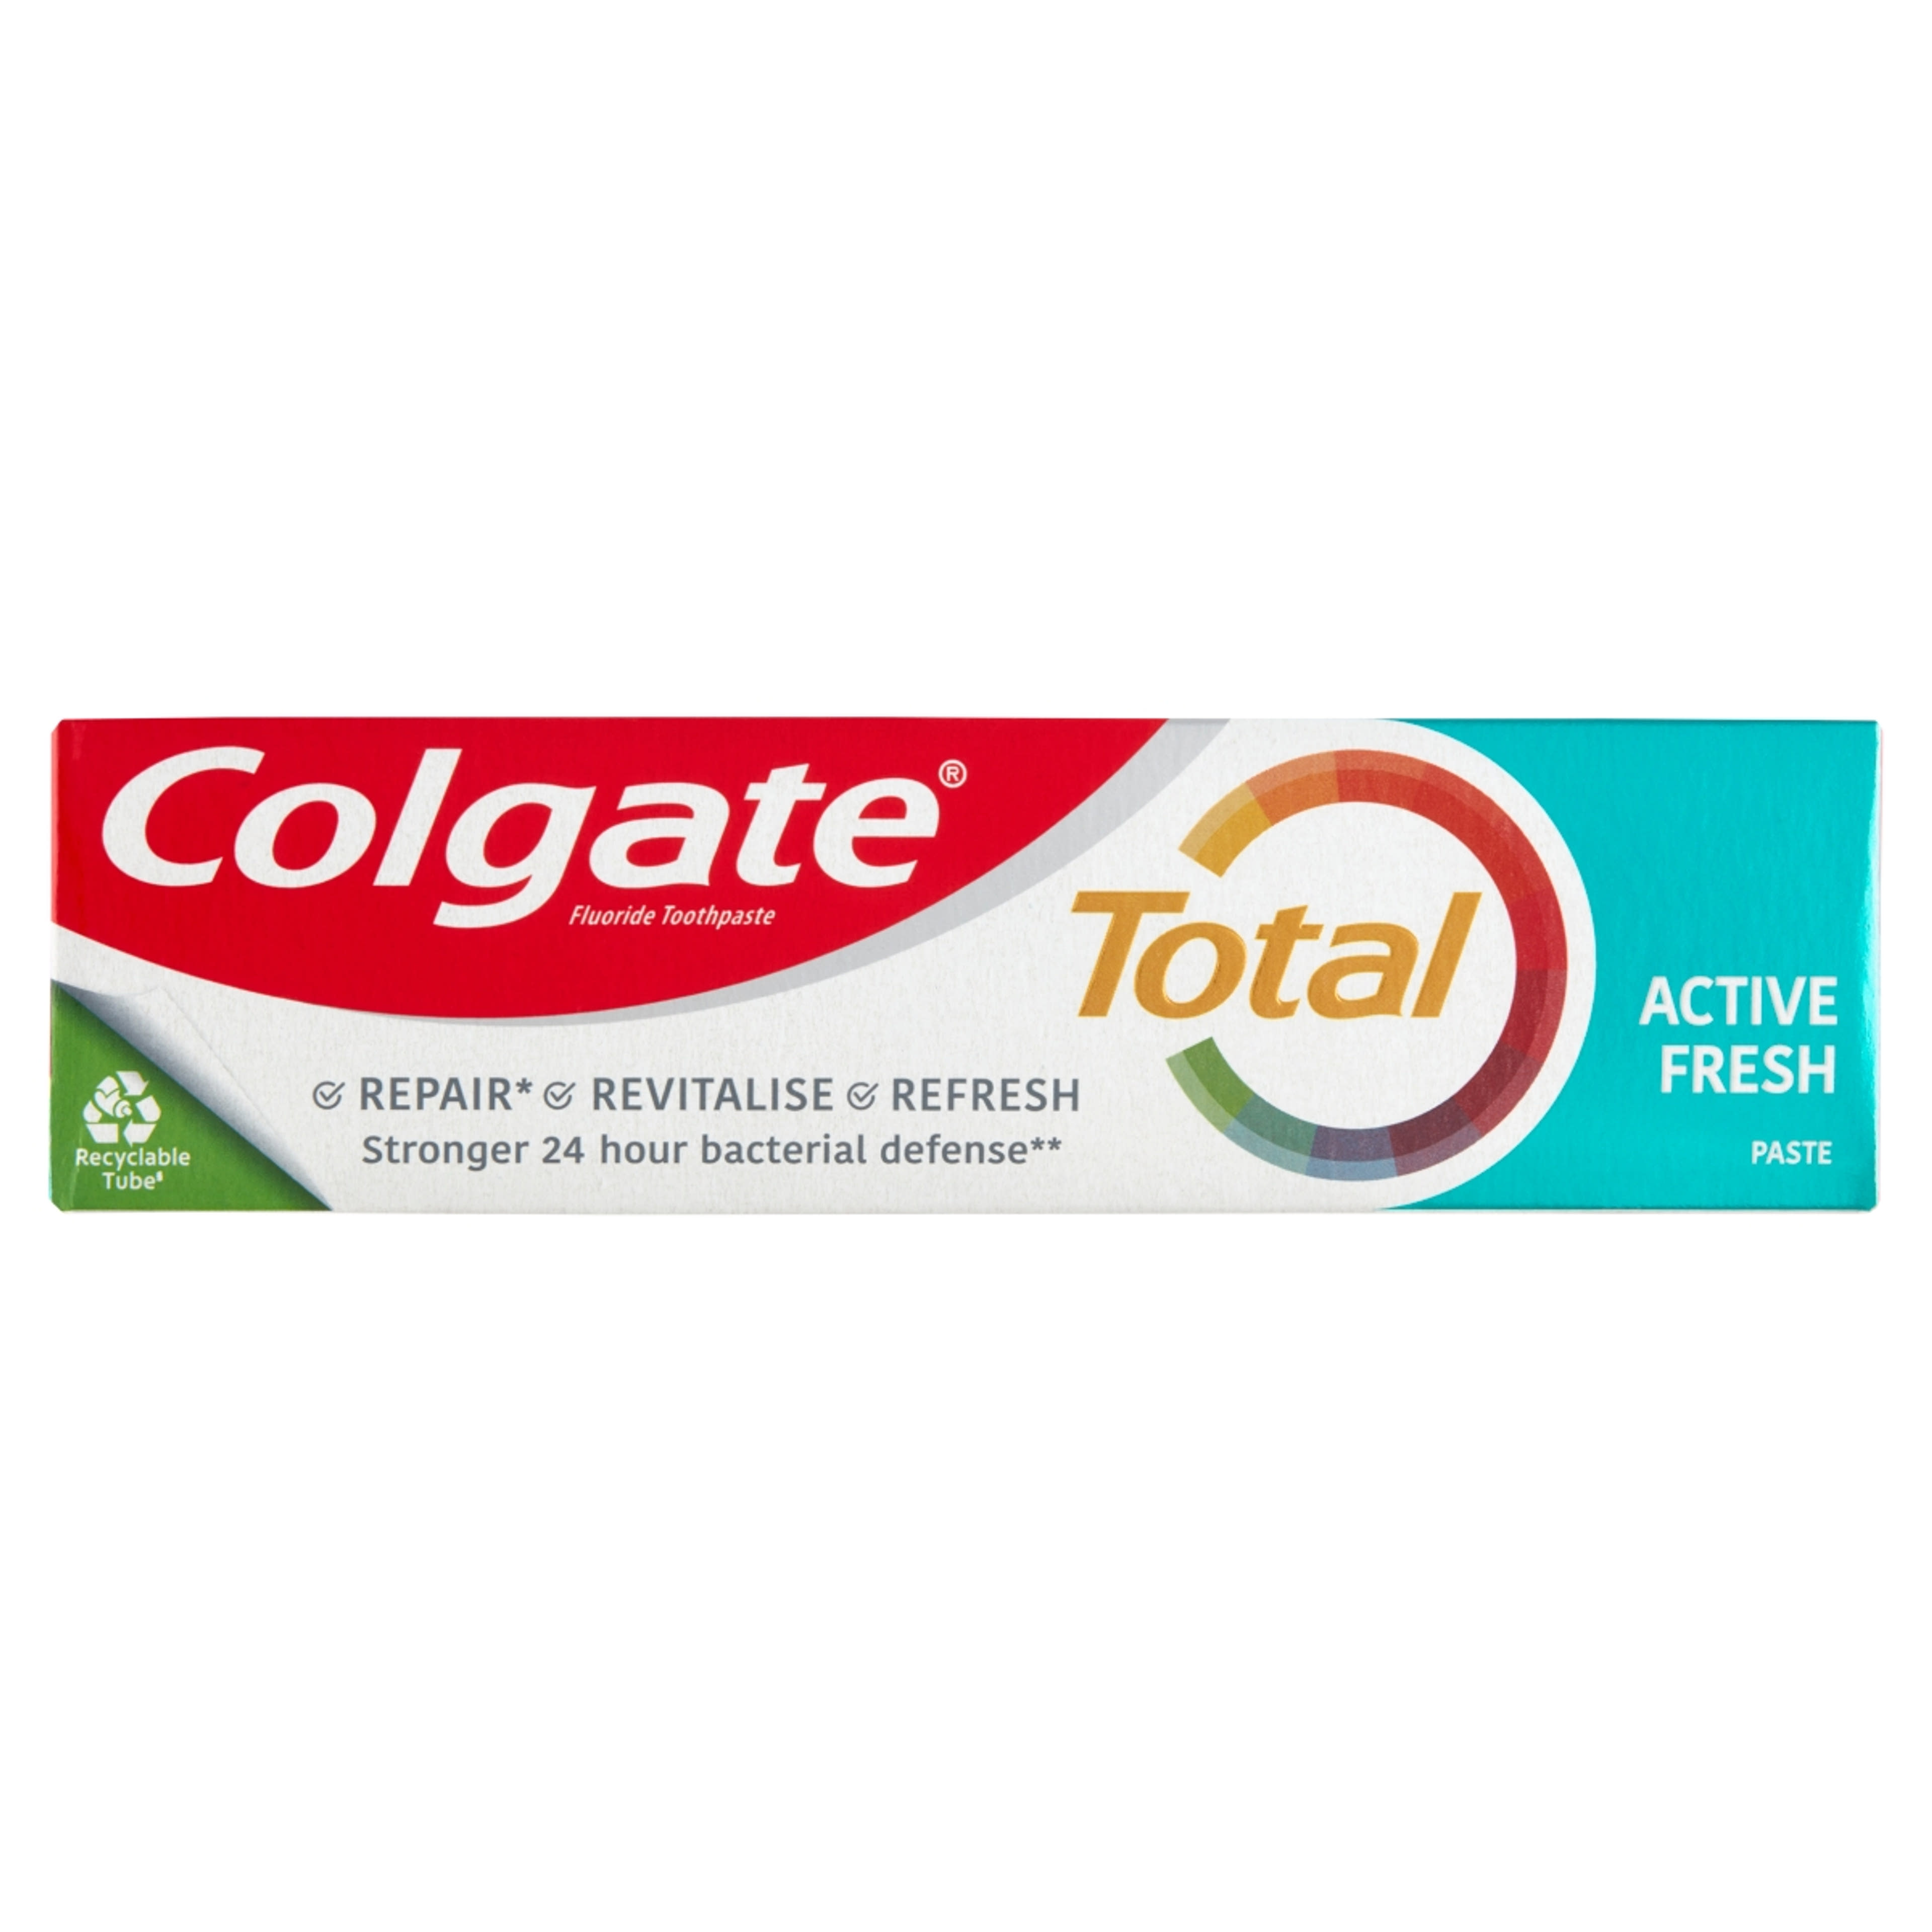 Colgate Active Fresh fogkrém - 75 ml-1